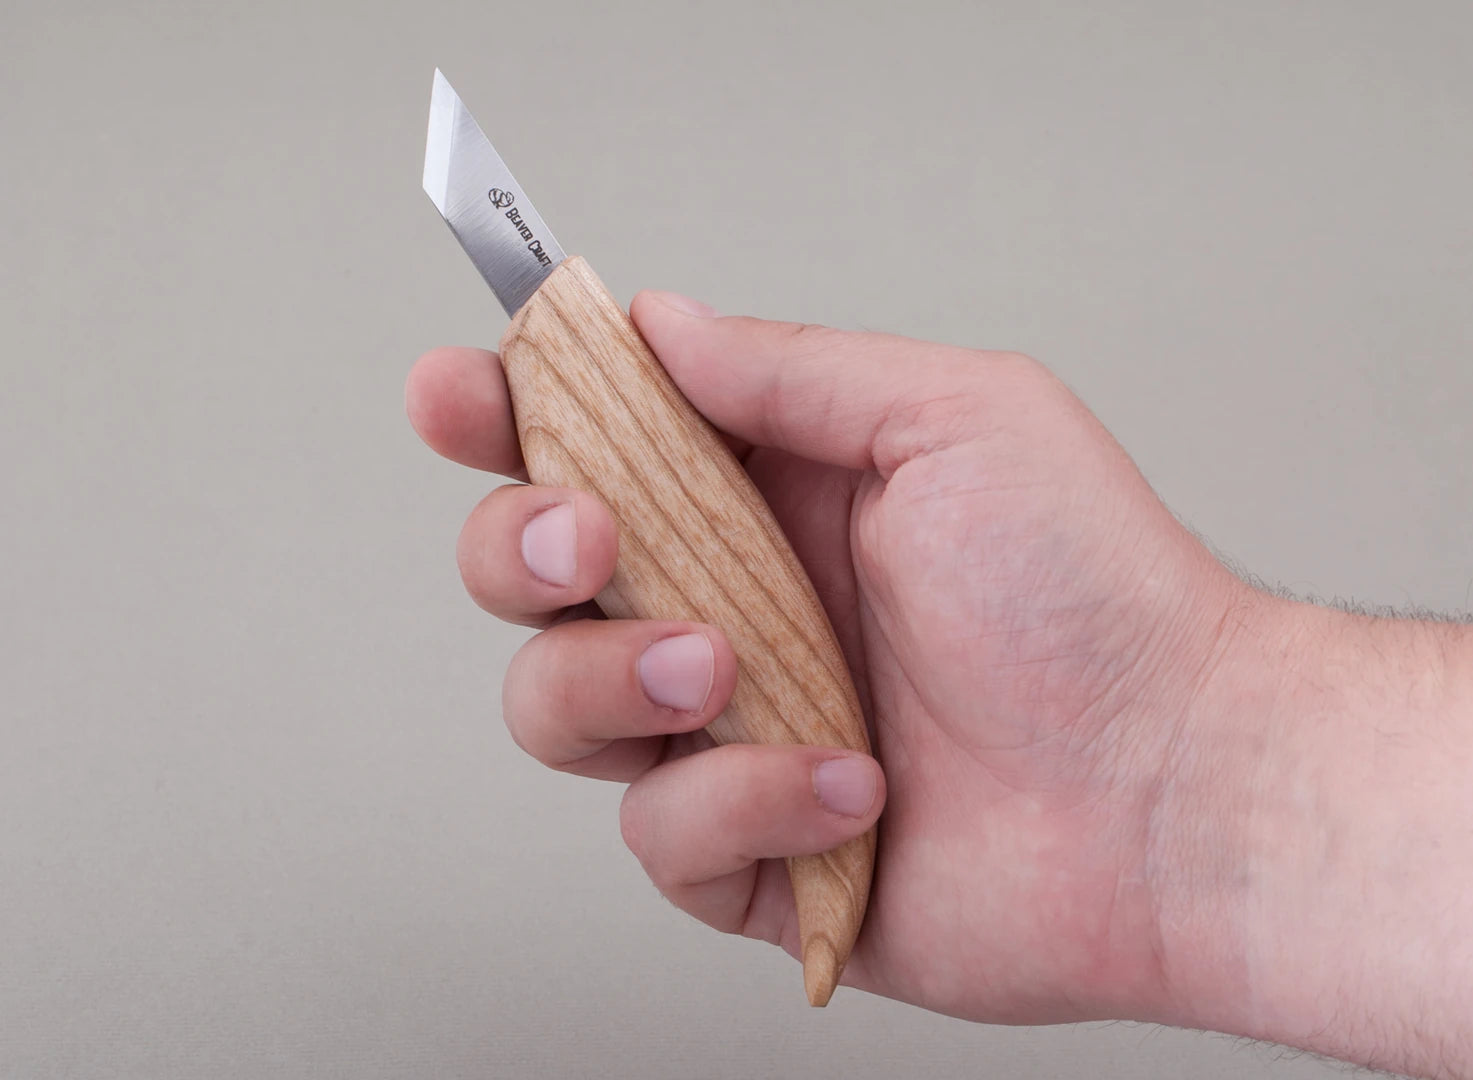 BeaverCraft Wood Carving Knife Kit for Beginners S55 Chip Carving